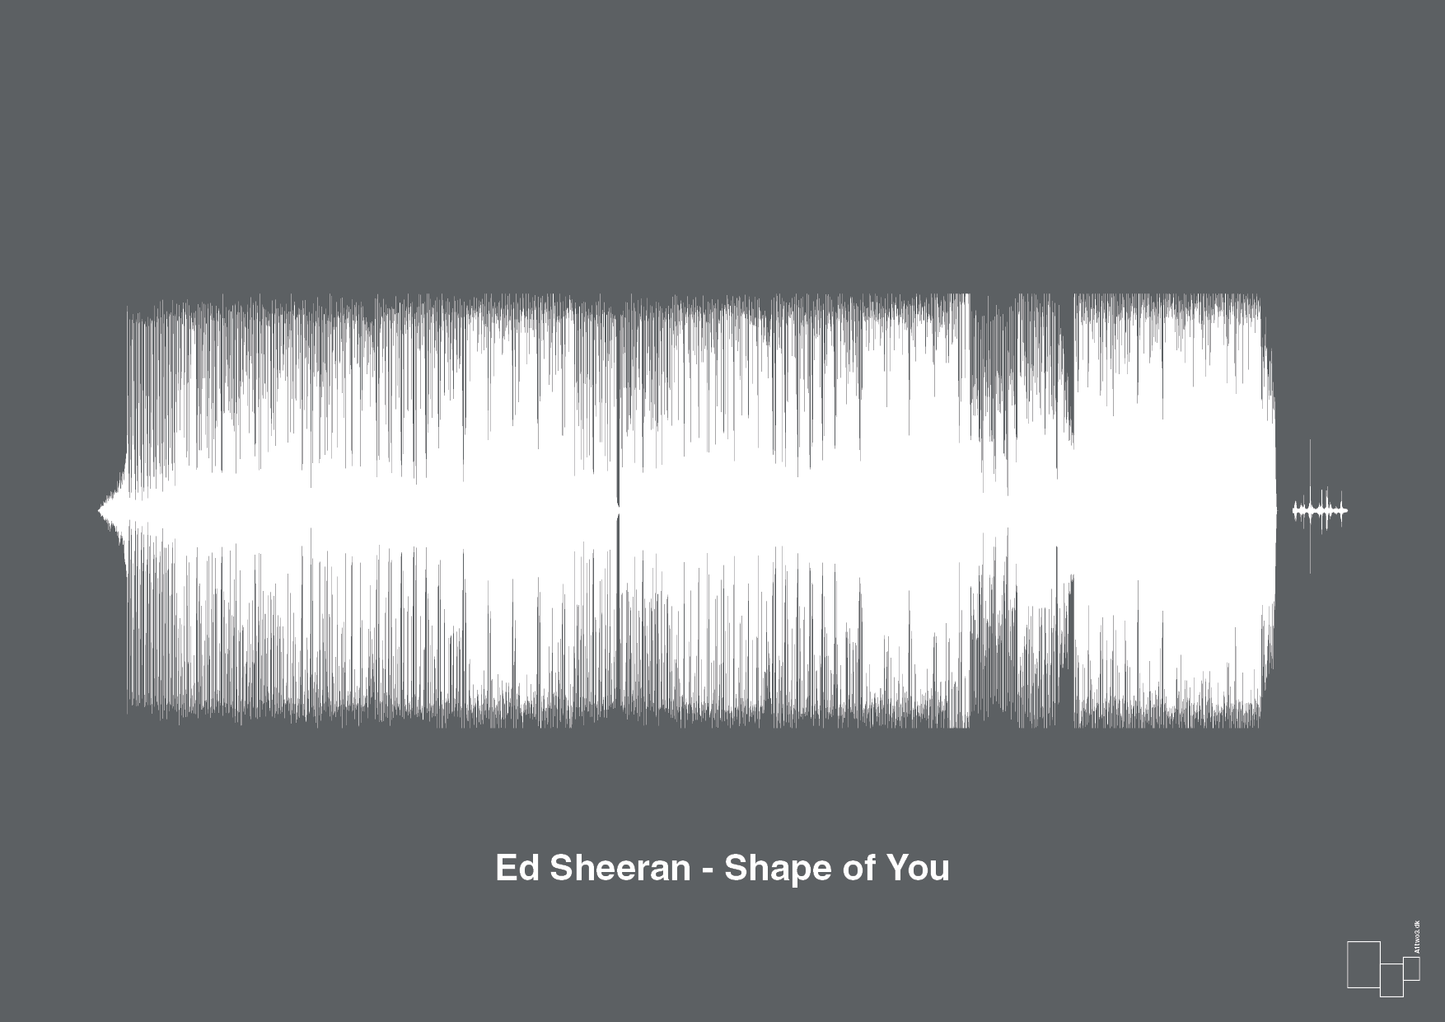 ed sheeran - shape of you - Plakat med Musik i Graphic Charcoal